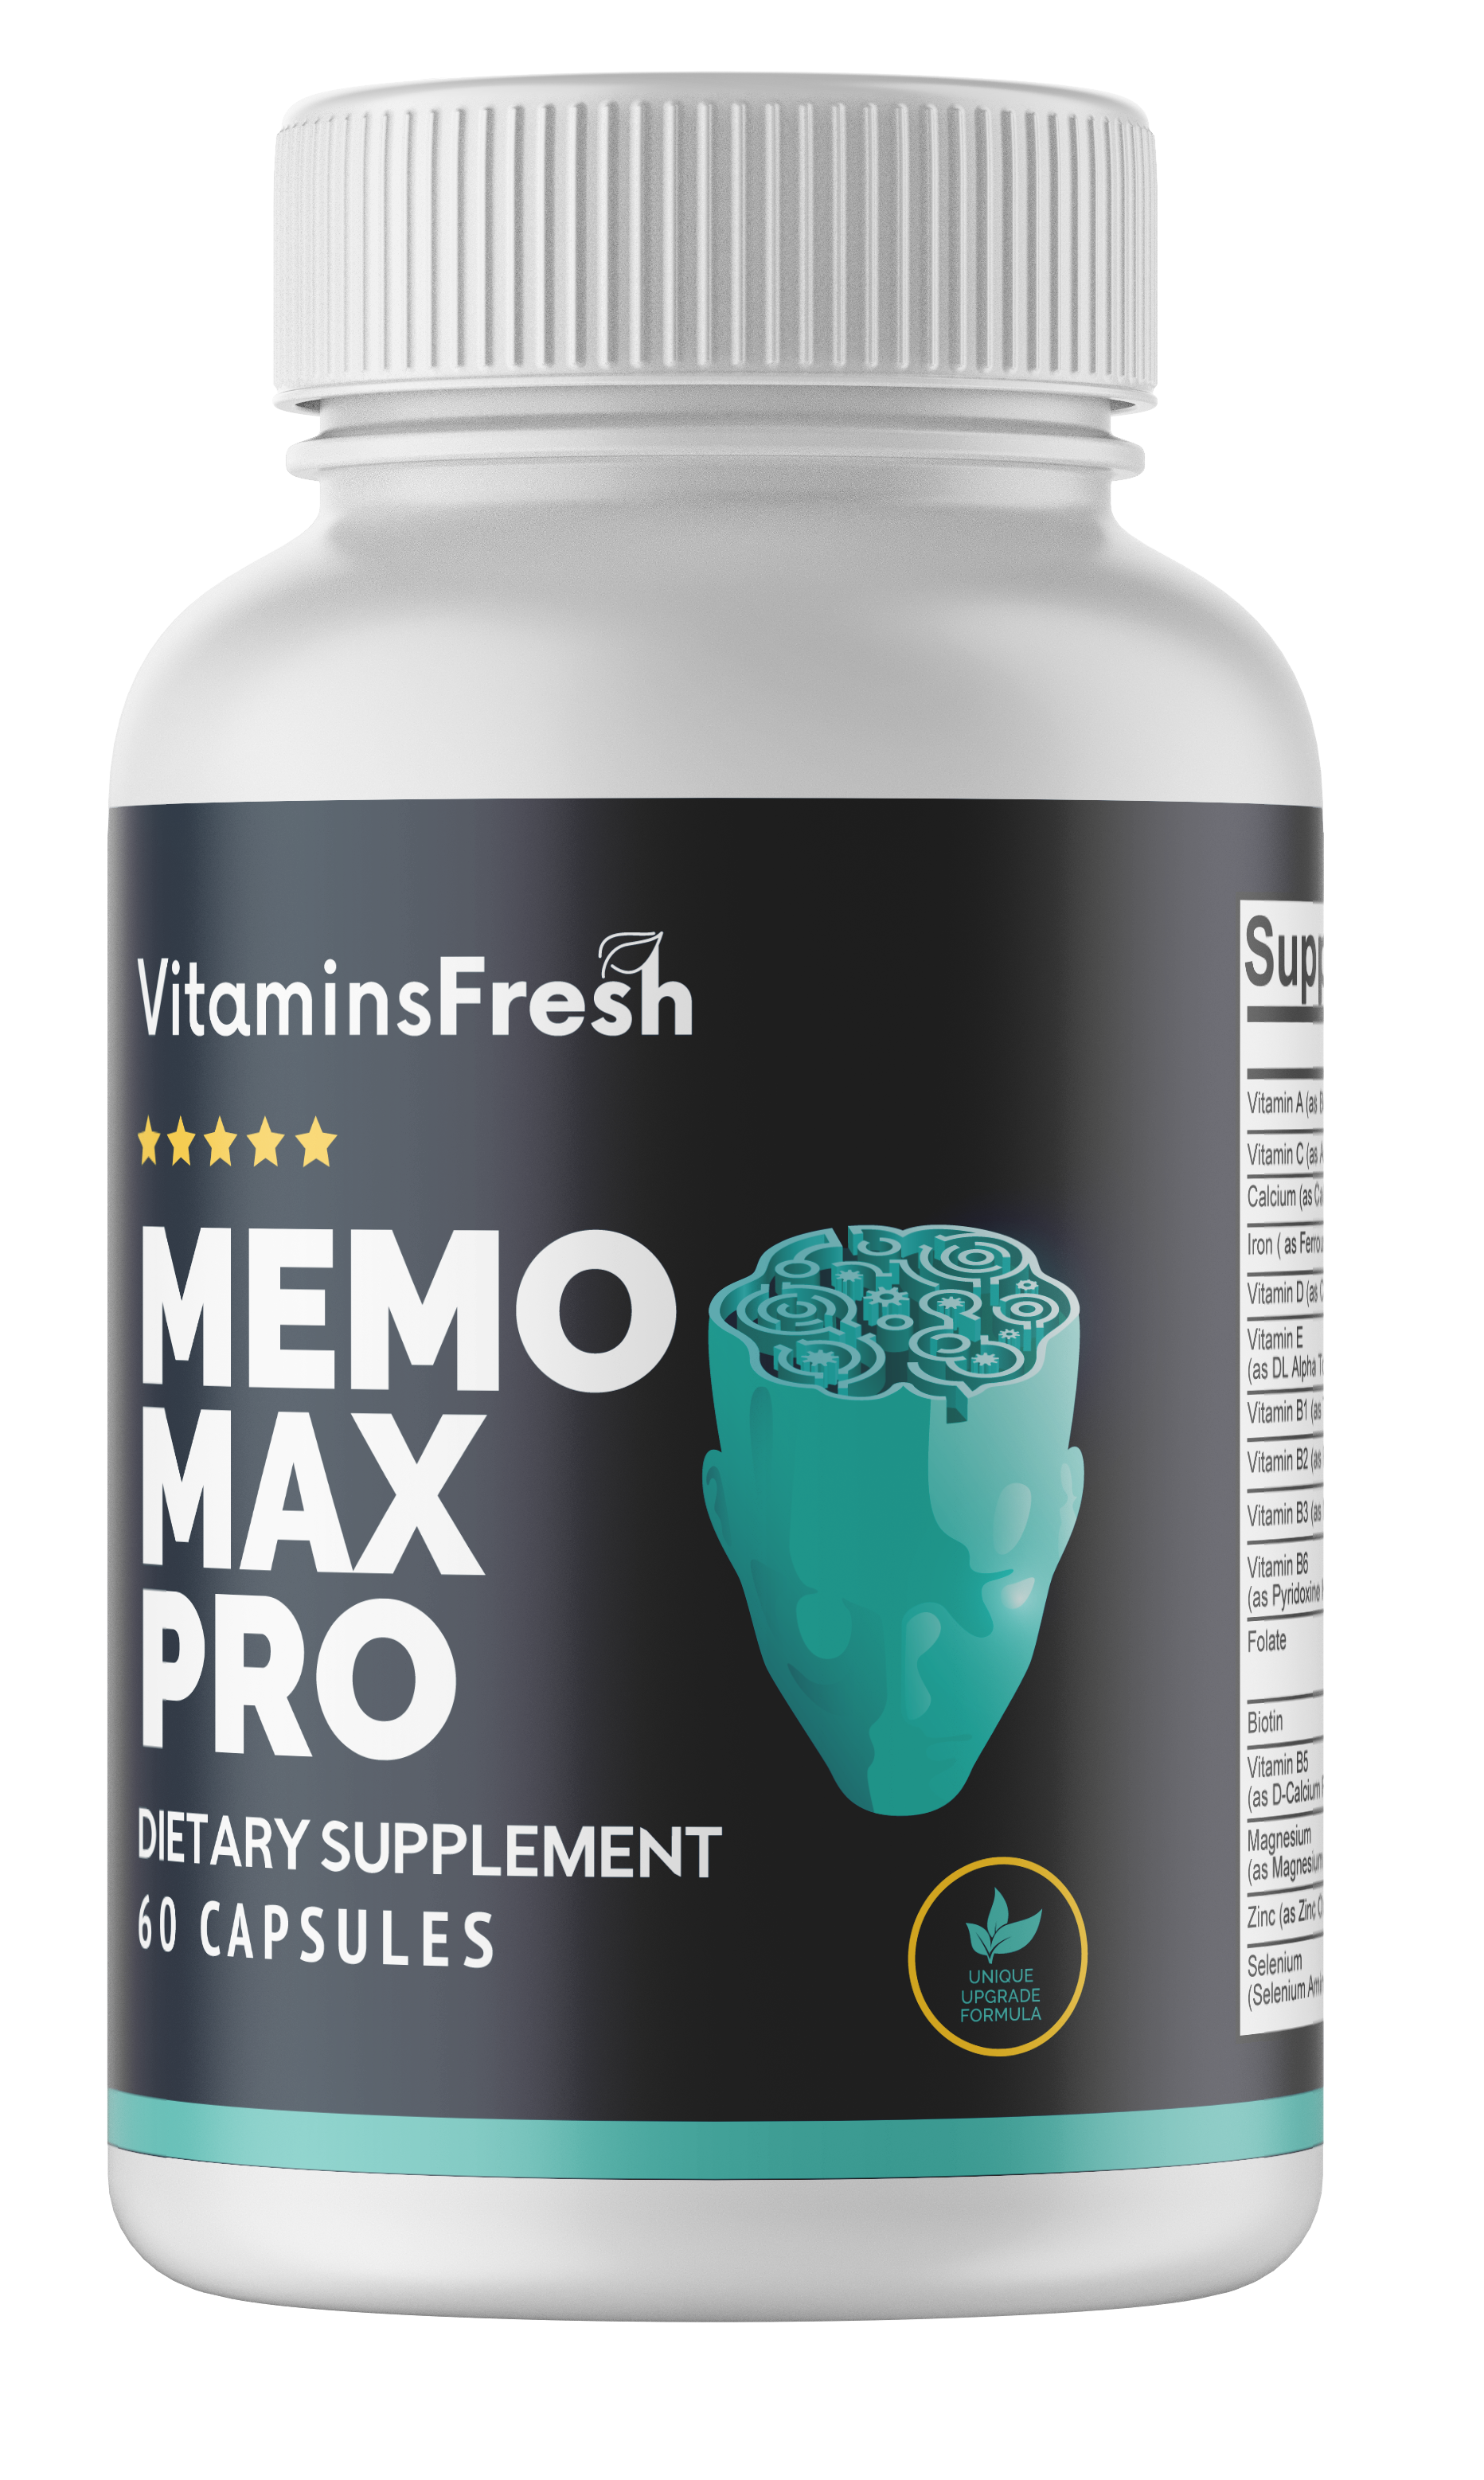 2 Bottles Memo Max Pro dietary supplement 60 Capsules x 2